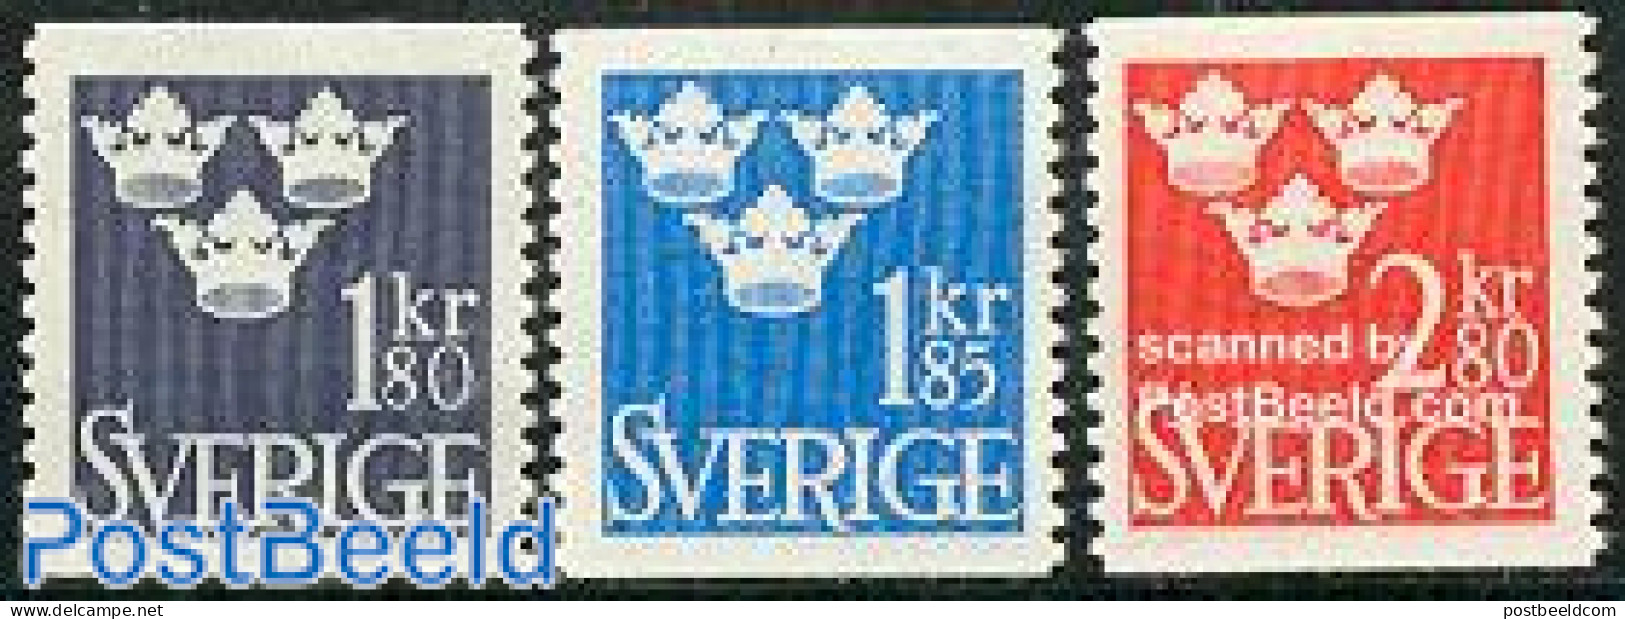 Sweden 1967 Definitives 3v, Mint NH - Ongebruikt